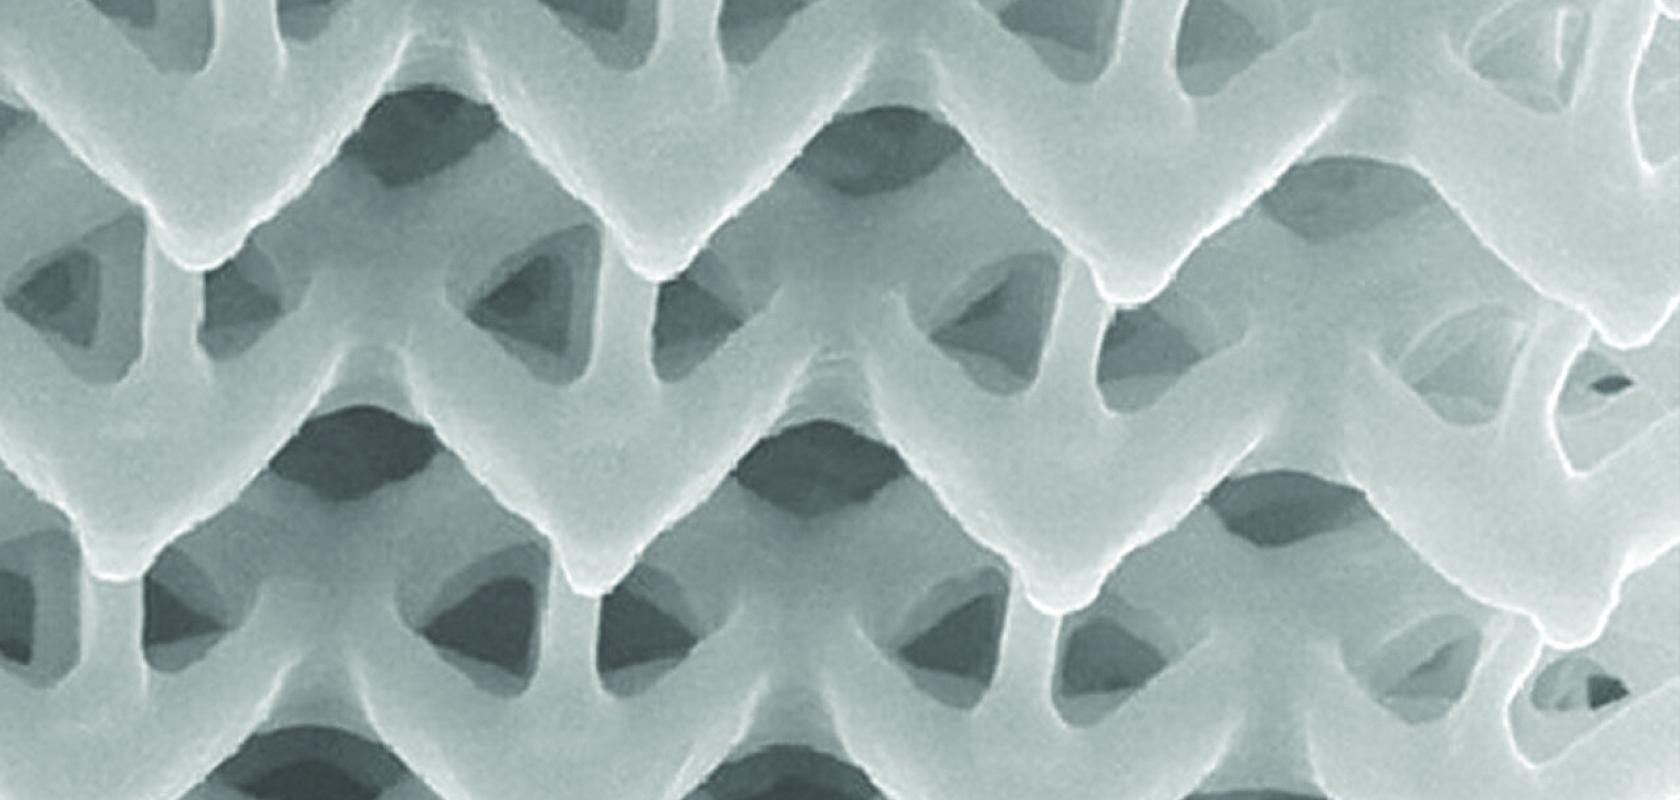 A nanoscale lattice